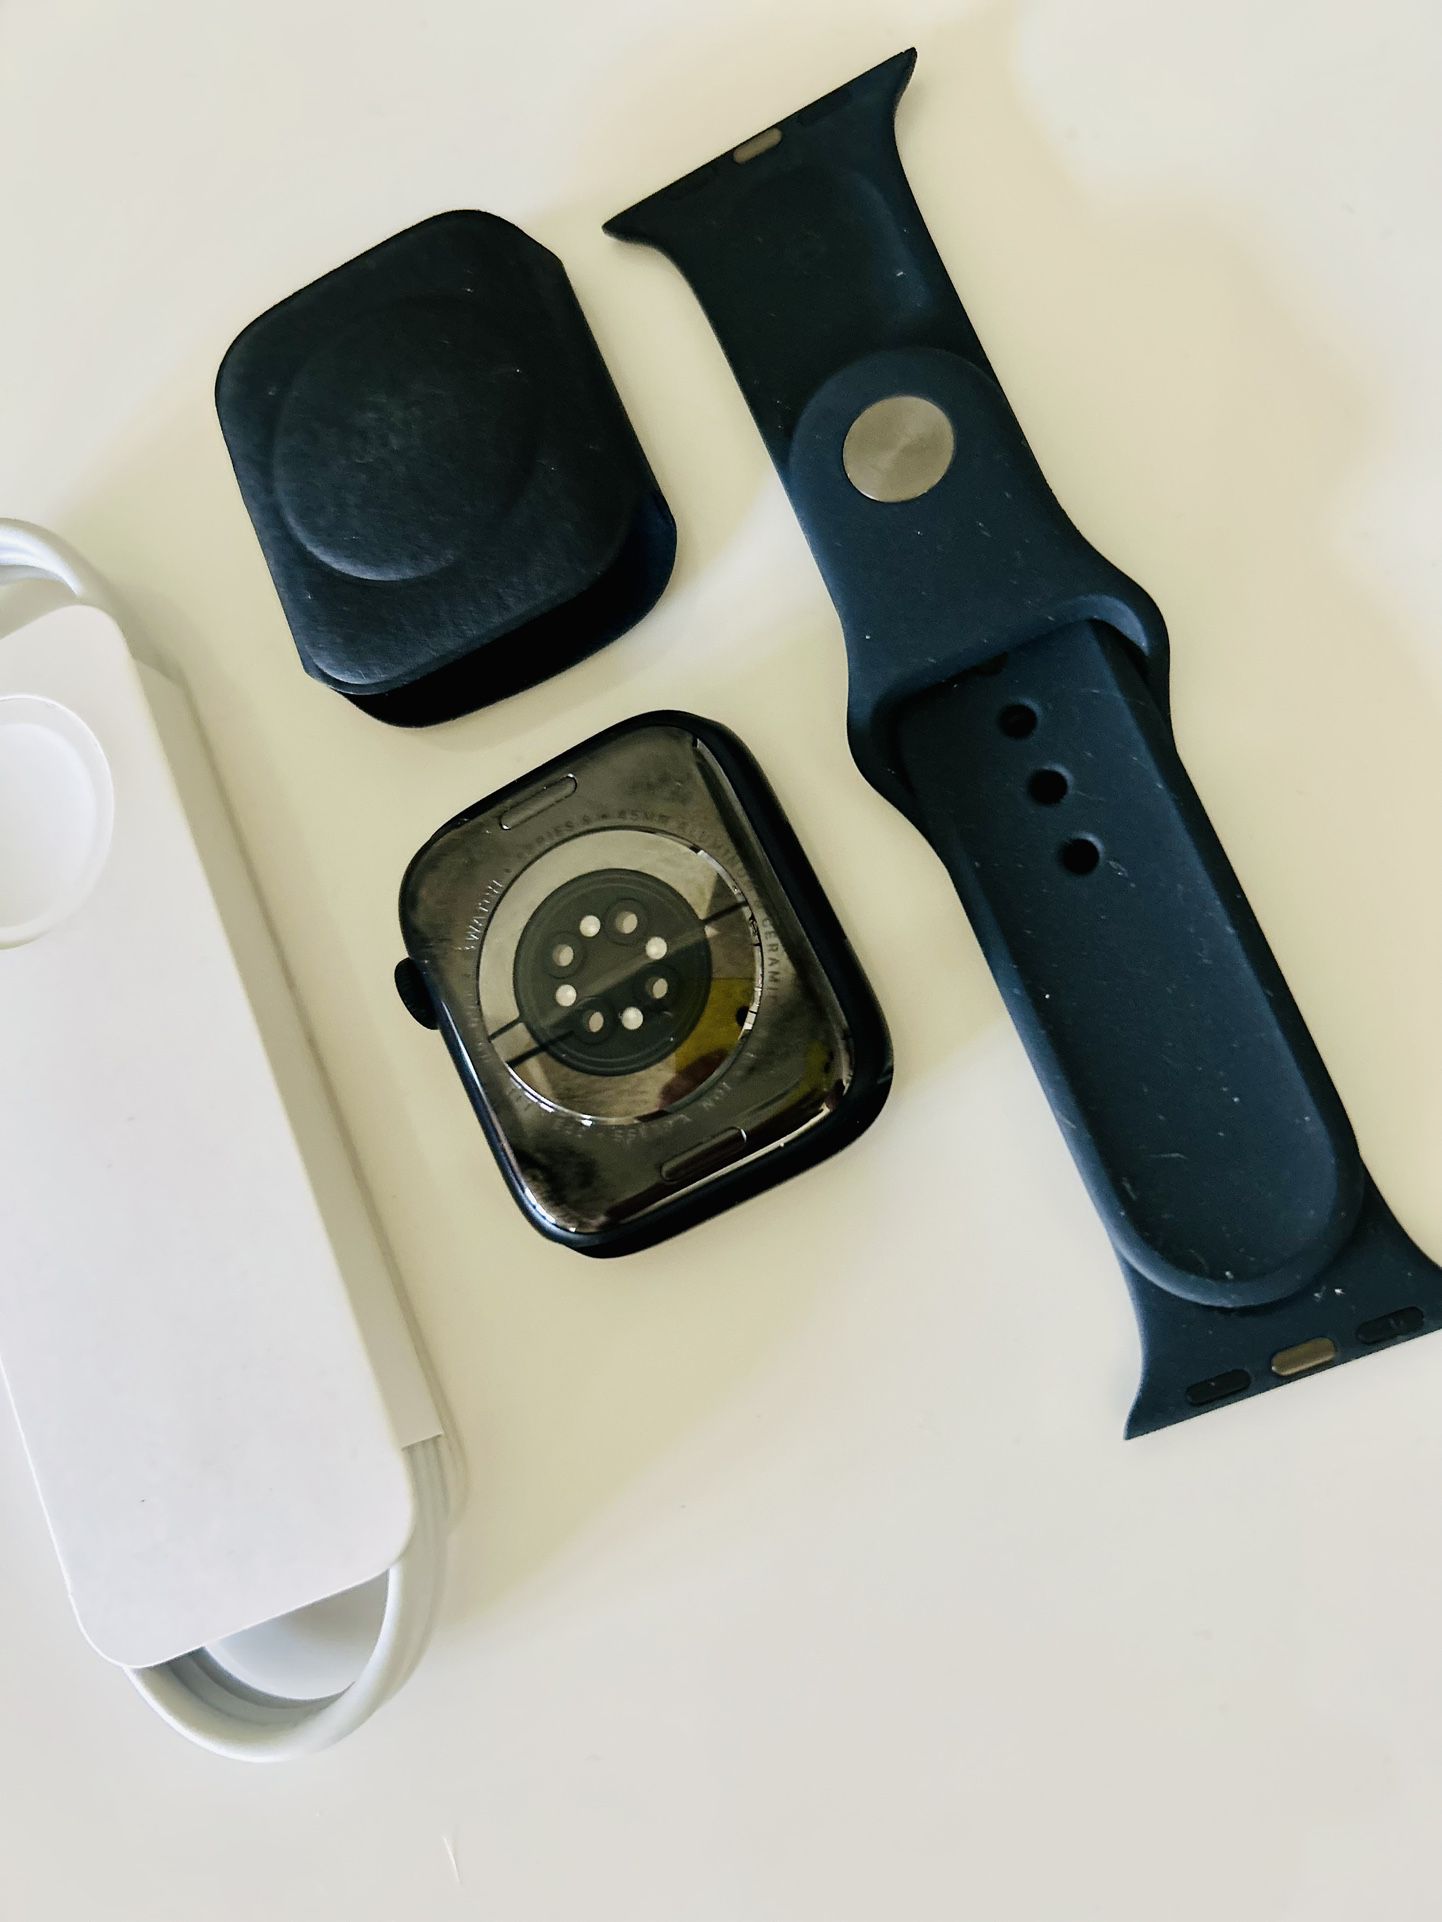 Apple Watch Series 8 41mm GPS + Unlocked Cellular! Retail $540 Asking $380